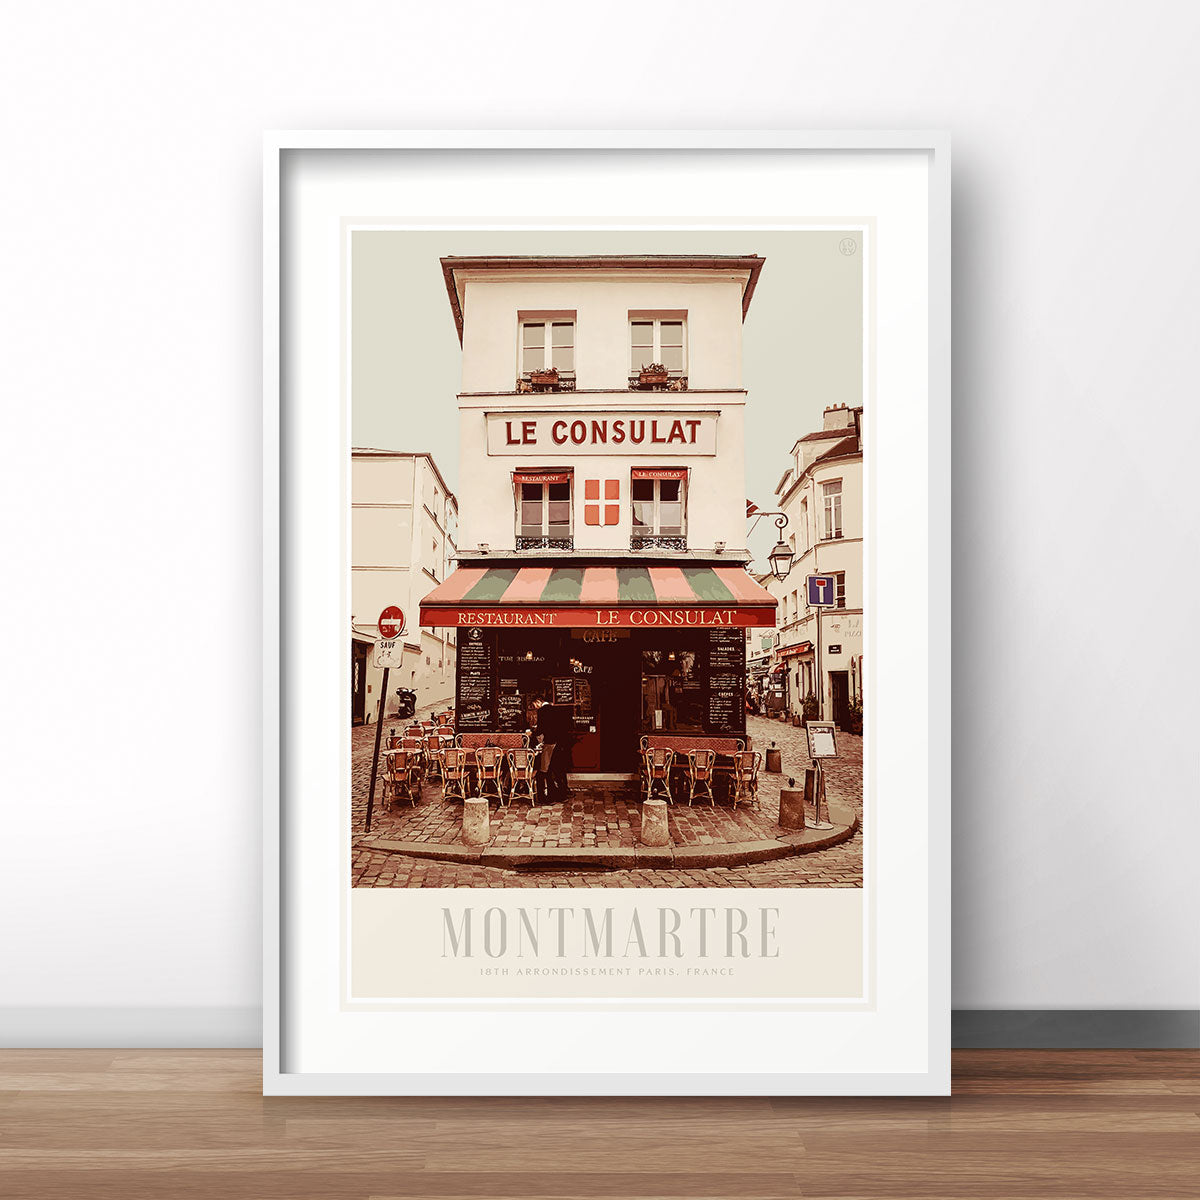 Le Consulat Cafe Paris retro vintage poster print from Places We Luv